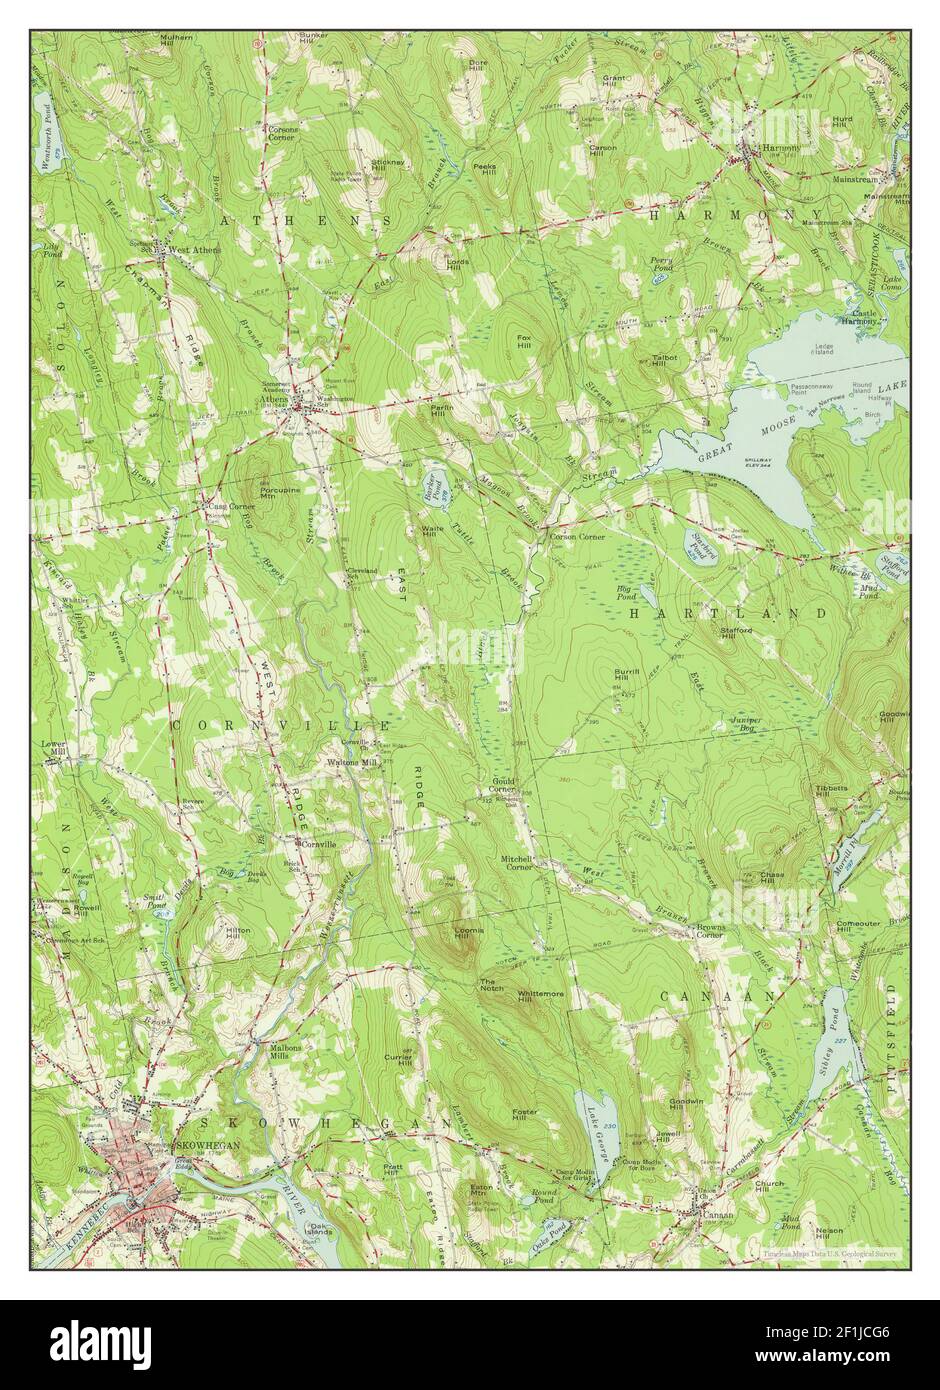 Skowhegan, Maine, map 1955, 1:62500, United States of America by Timeless Maps, data U.S. Geological Survey Stock Photo